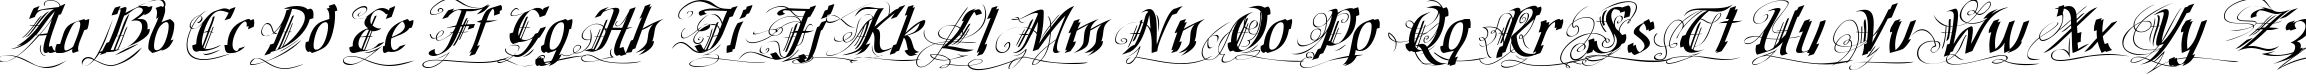 Пример написания английского алфавита шрифтом Cretino